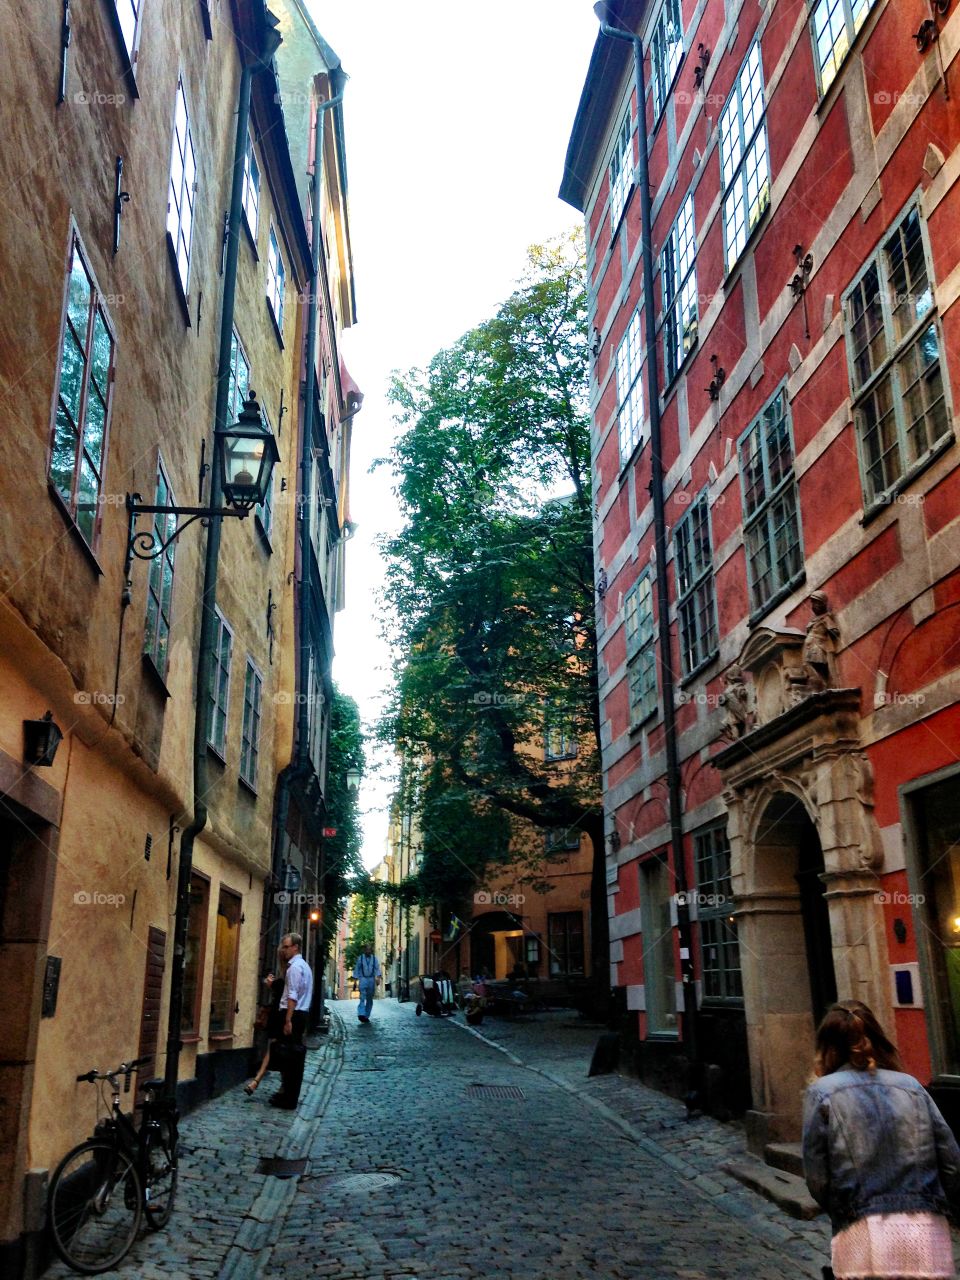 Stockholm city. Lovely old town in Stockholm!
